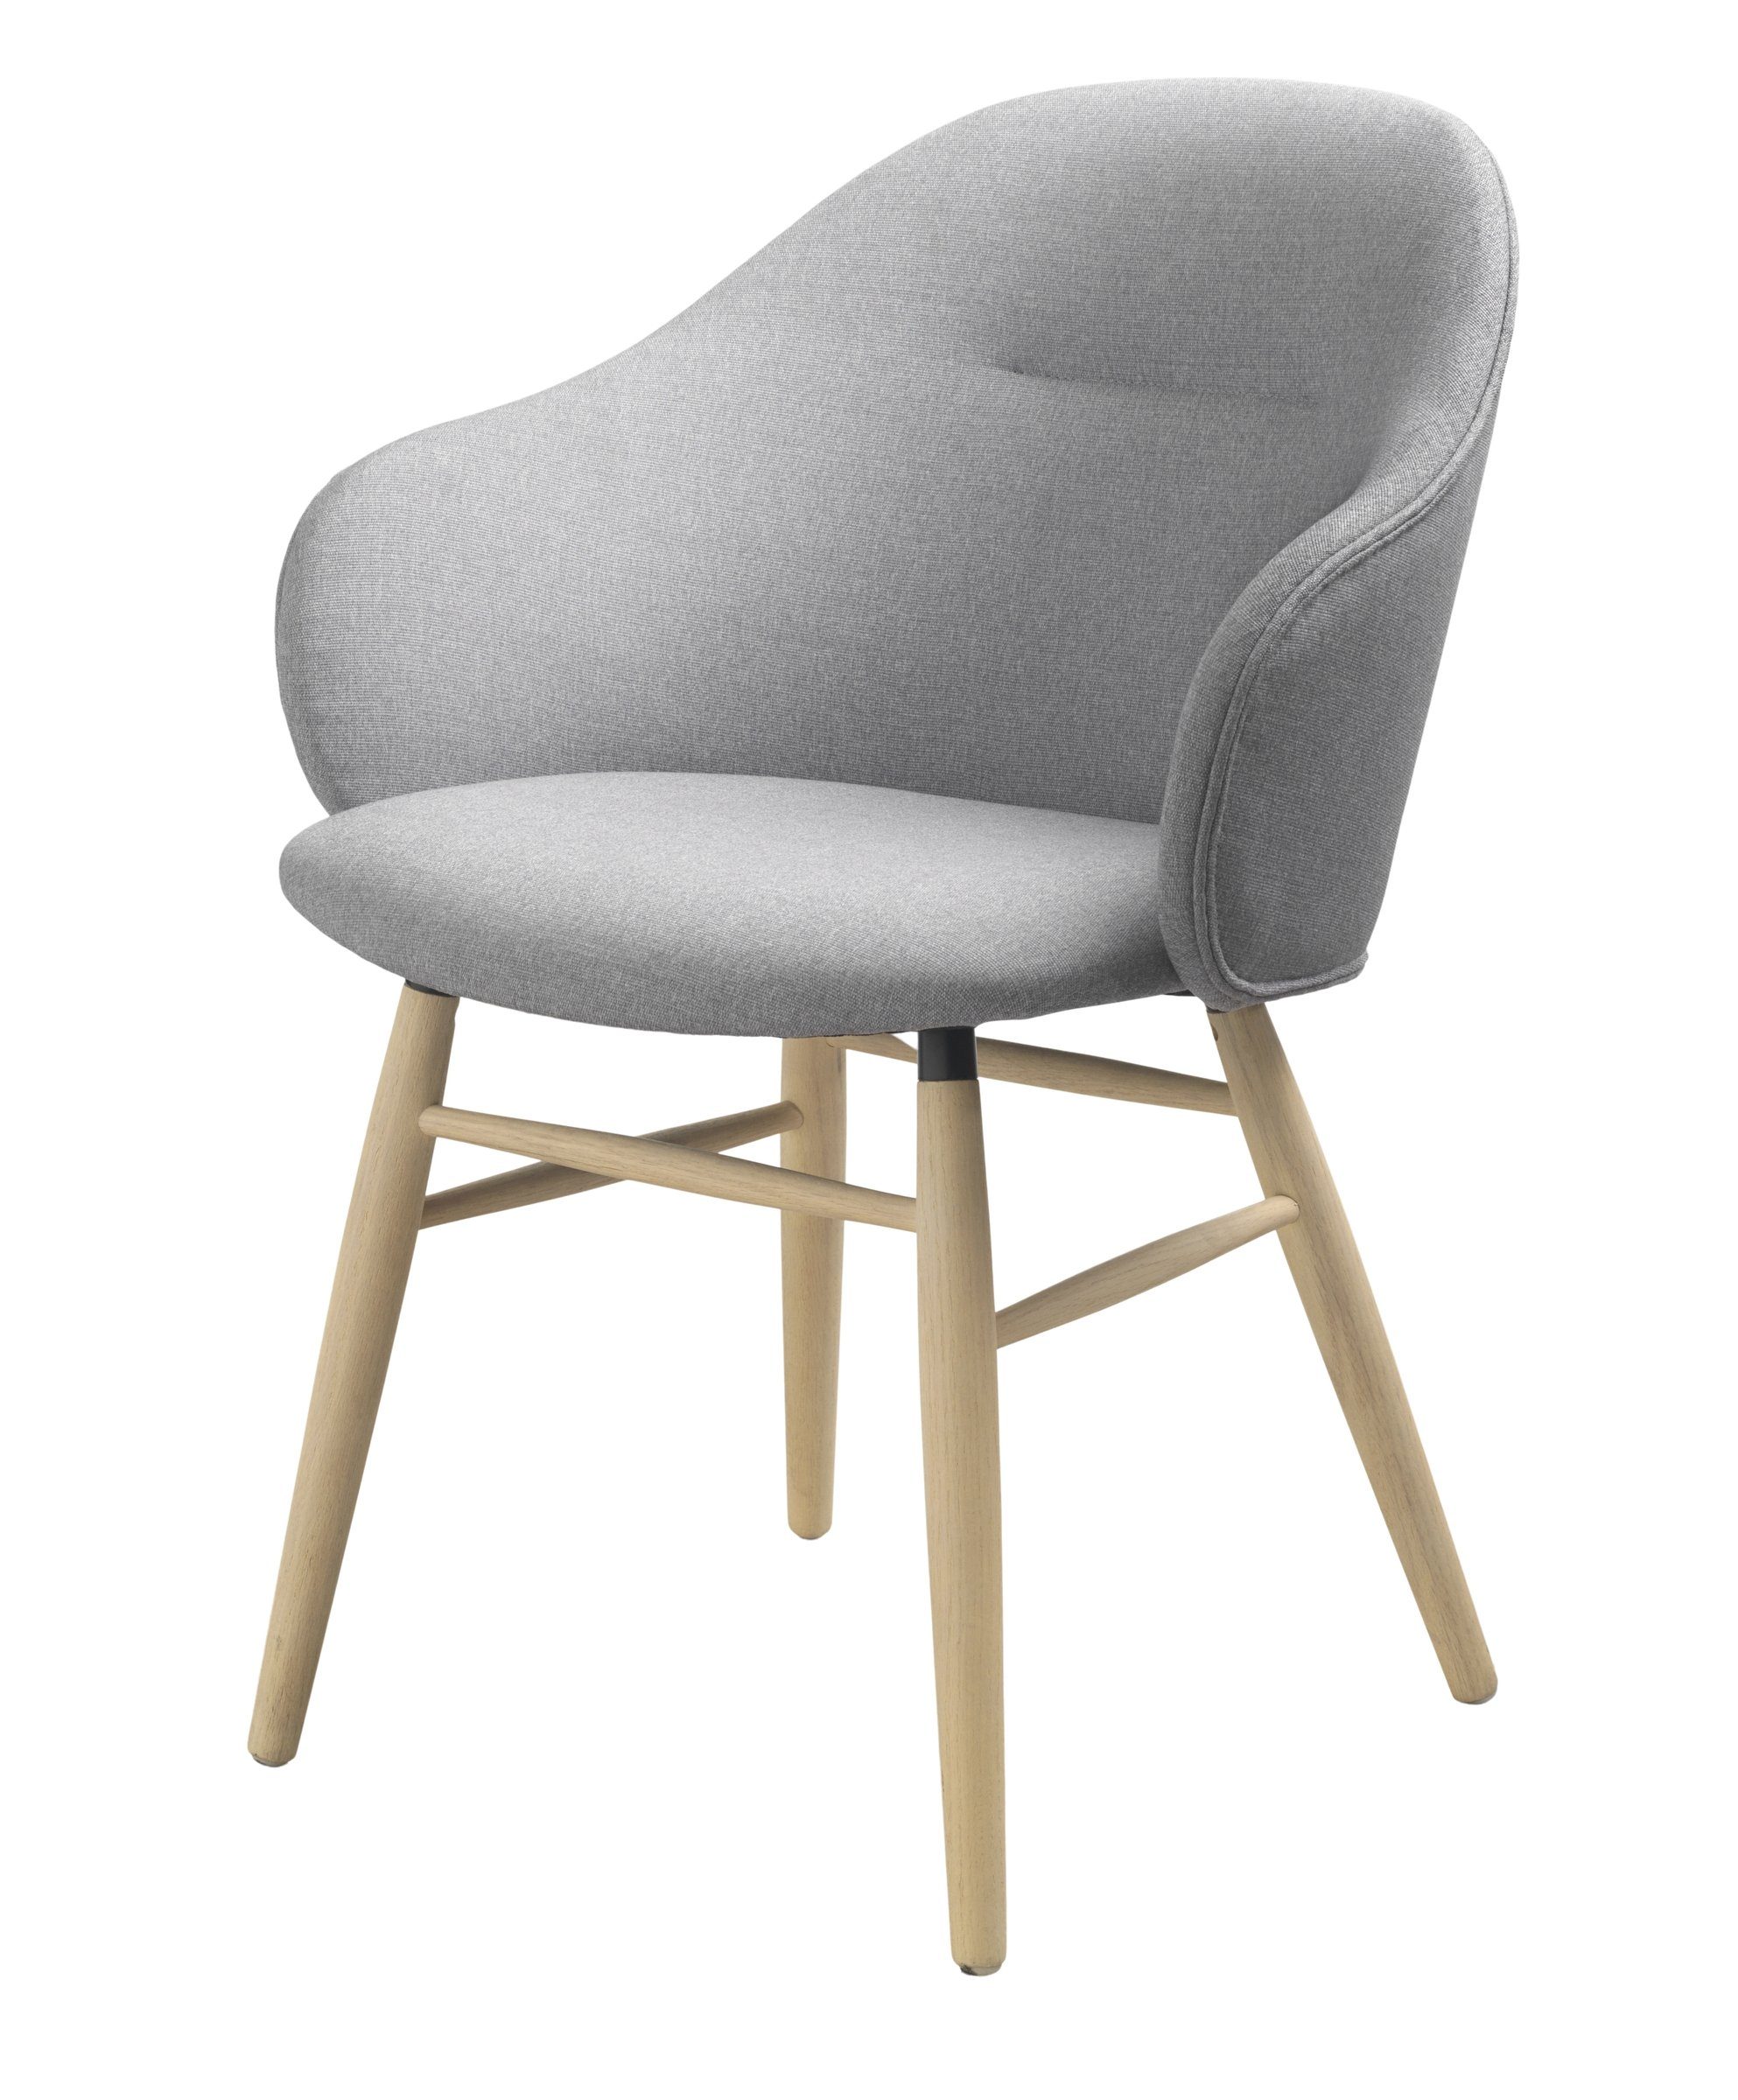 möbelando Stuhl TENO (B/H/T: 56x83x60 cm), aus Massivholz/Stoff in grau | Stühle